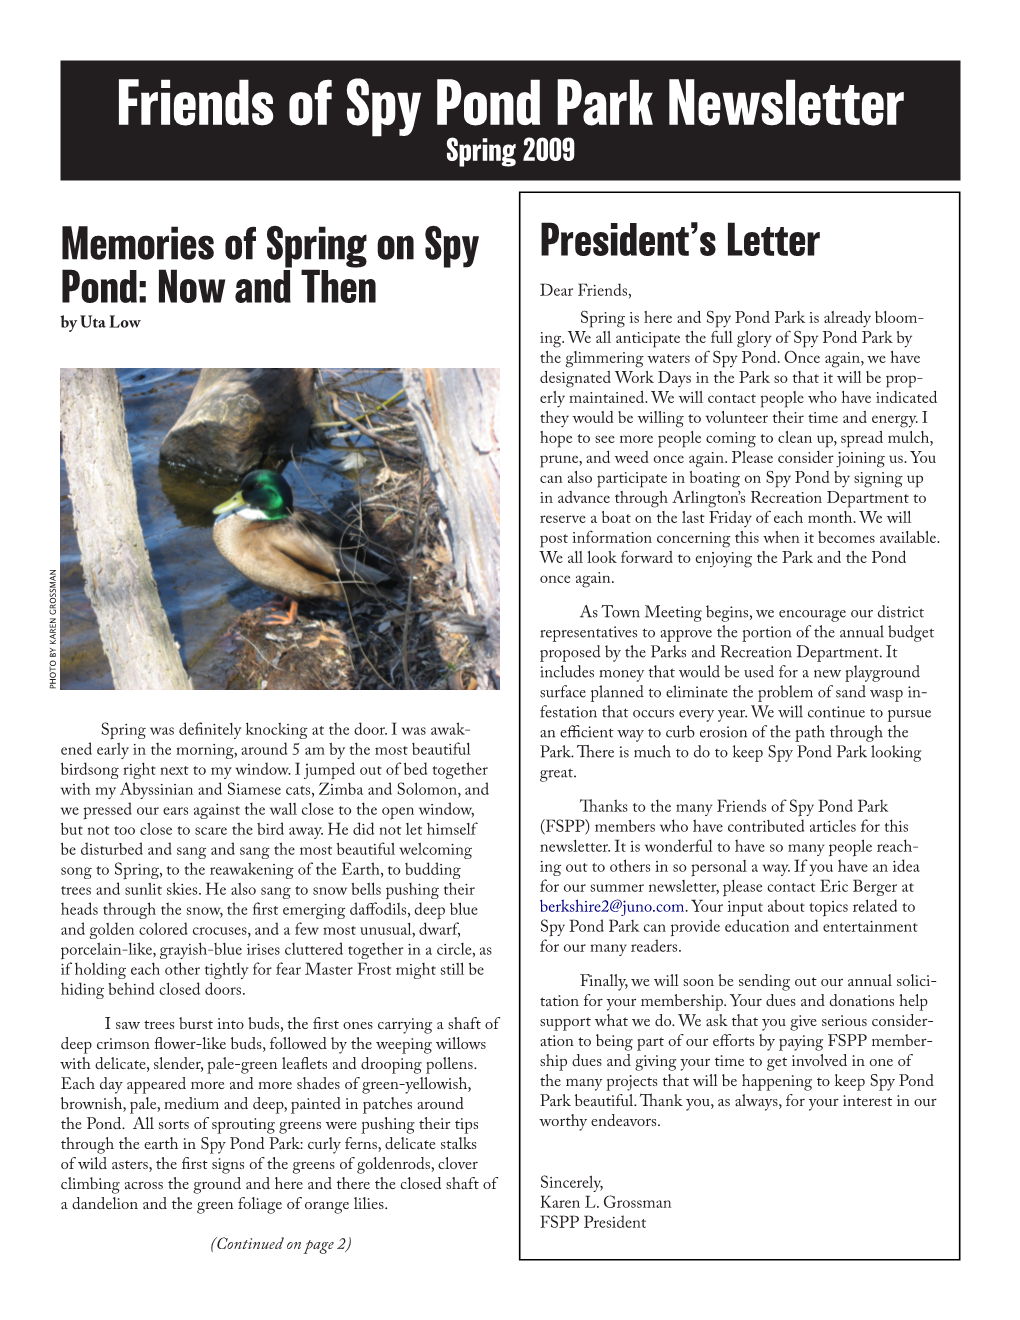 Friends of Spy Pond Park Newsletter Spring 2009